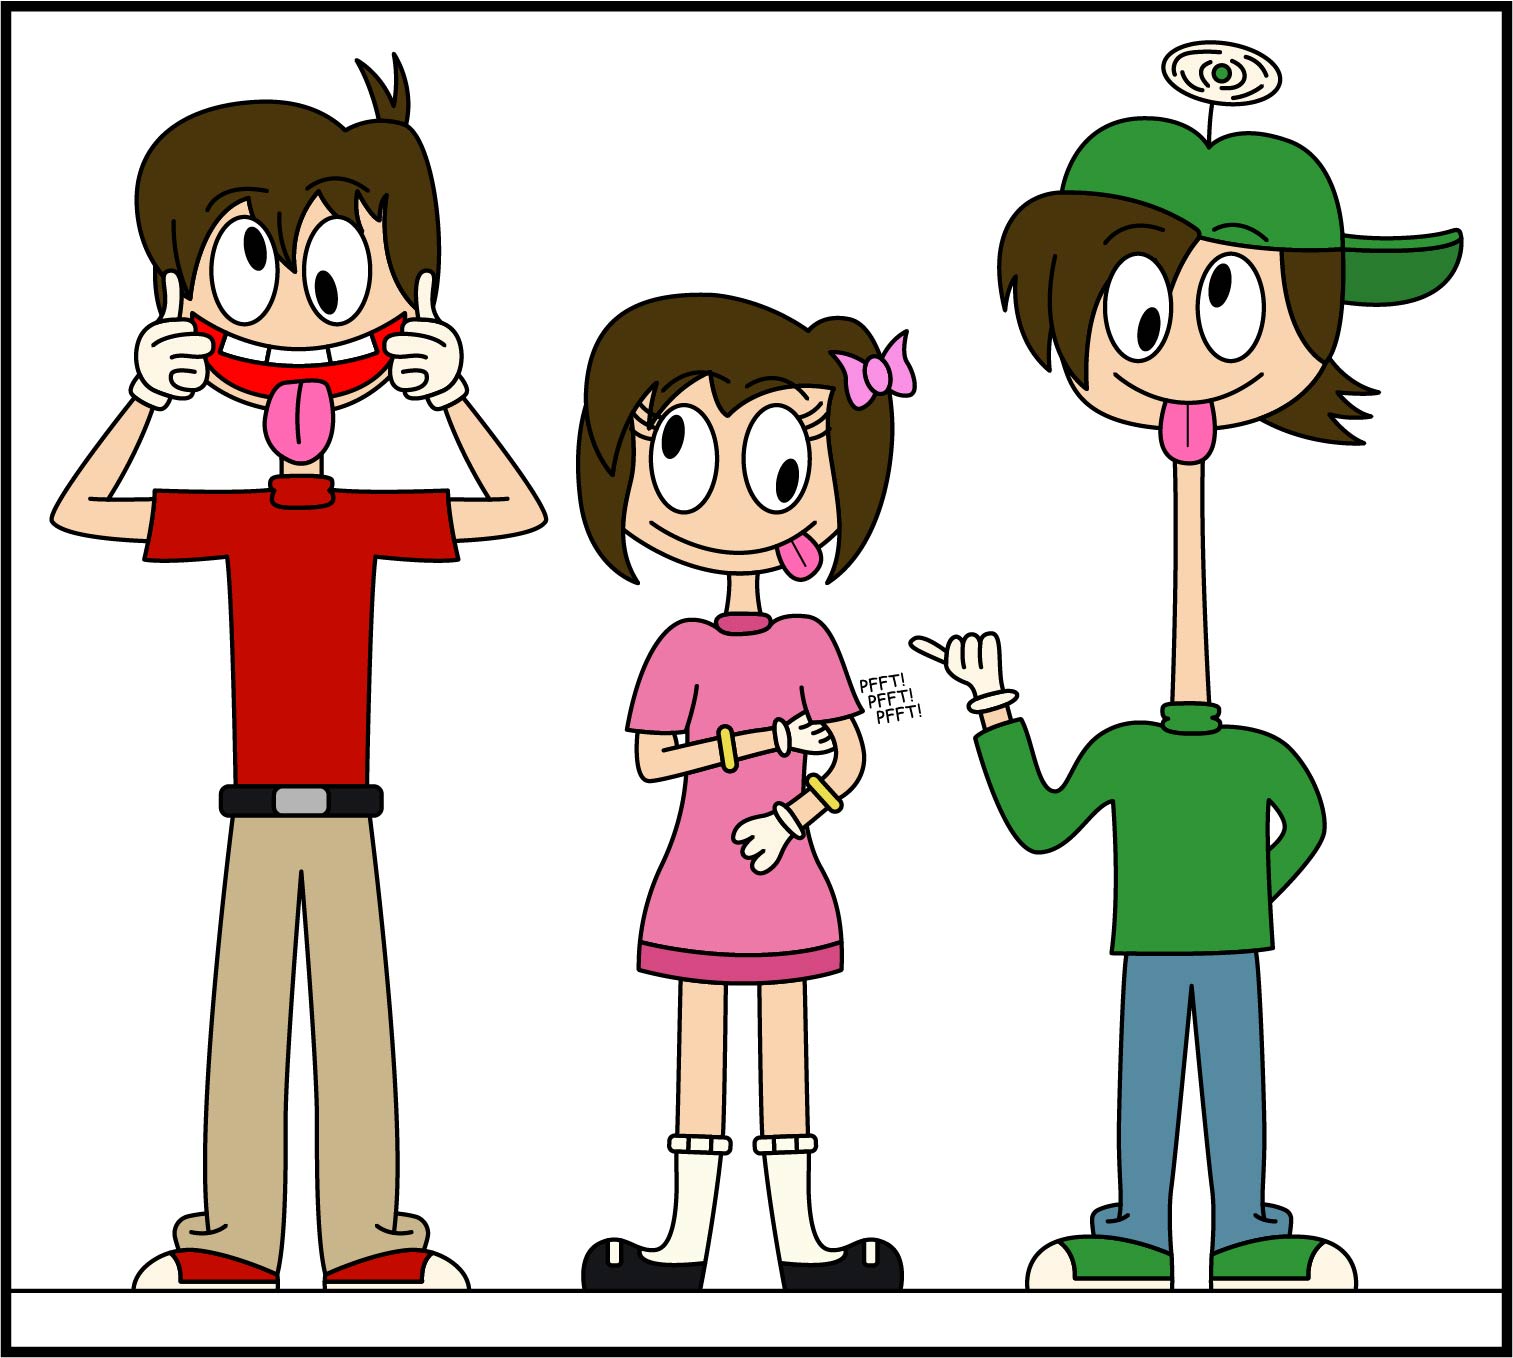 The Cartoon Siblings by Gamemaster24681012 on DeviantArt